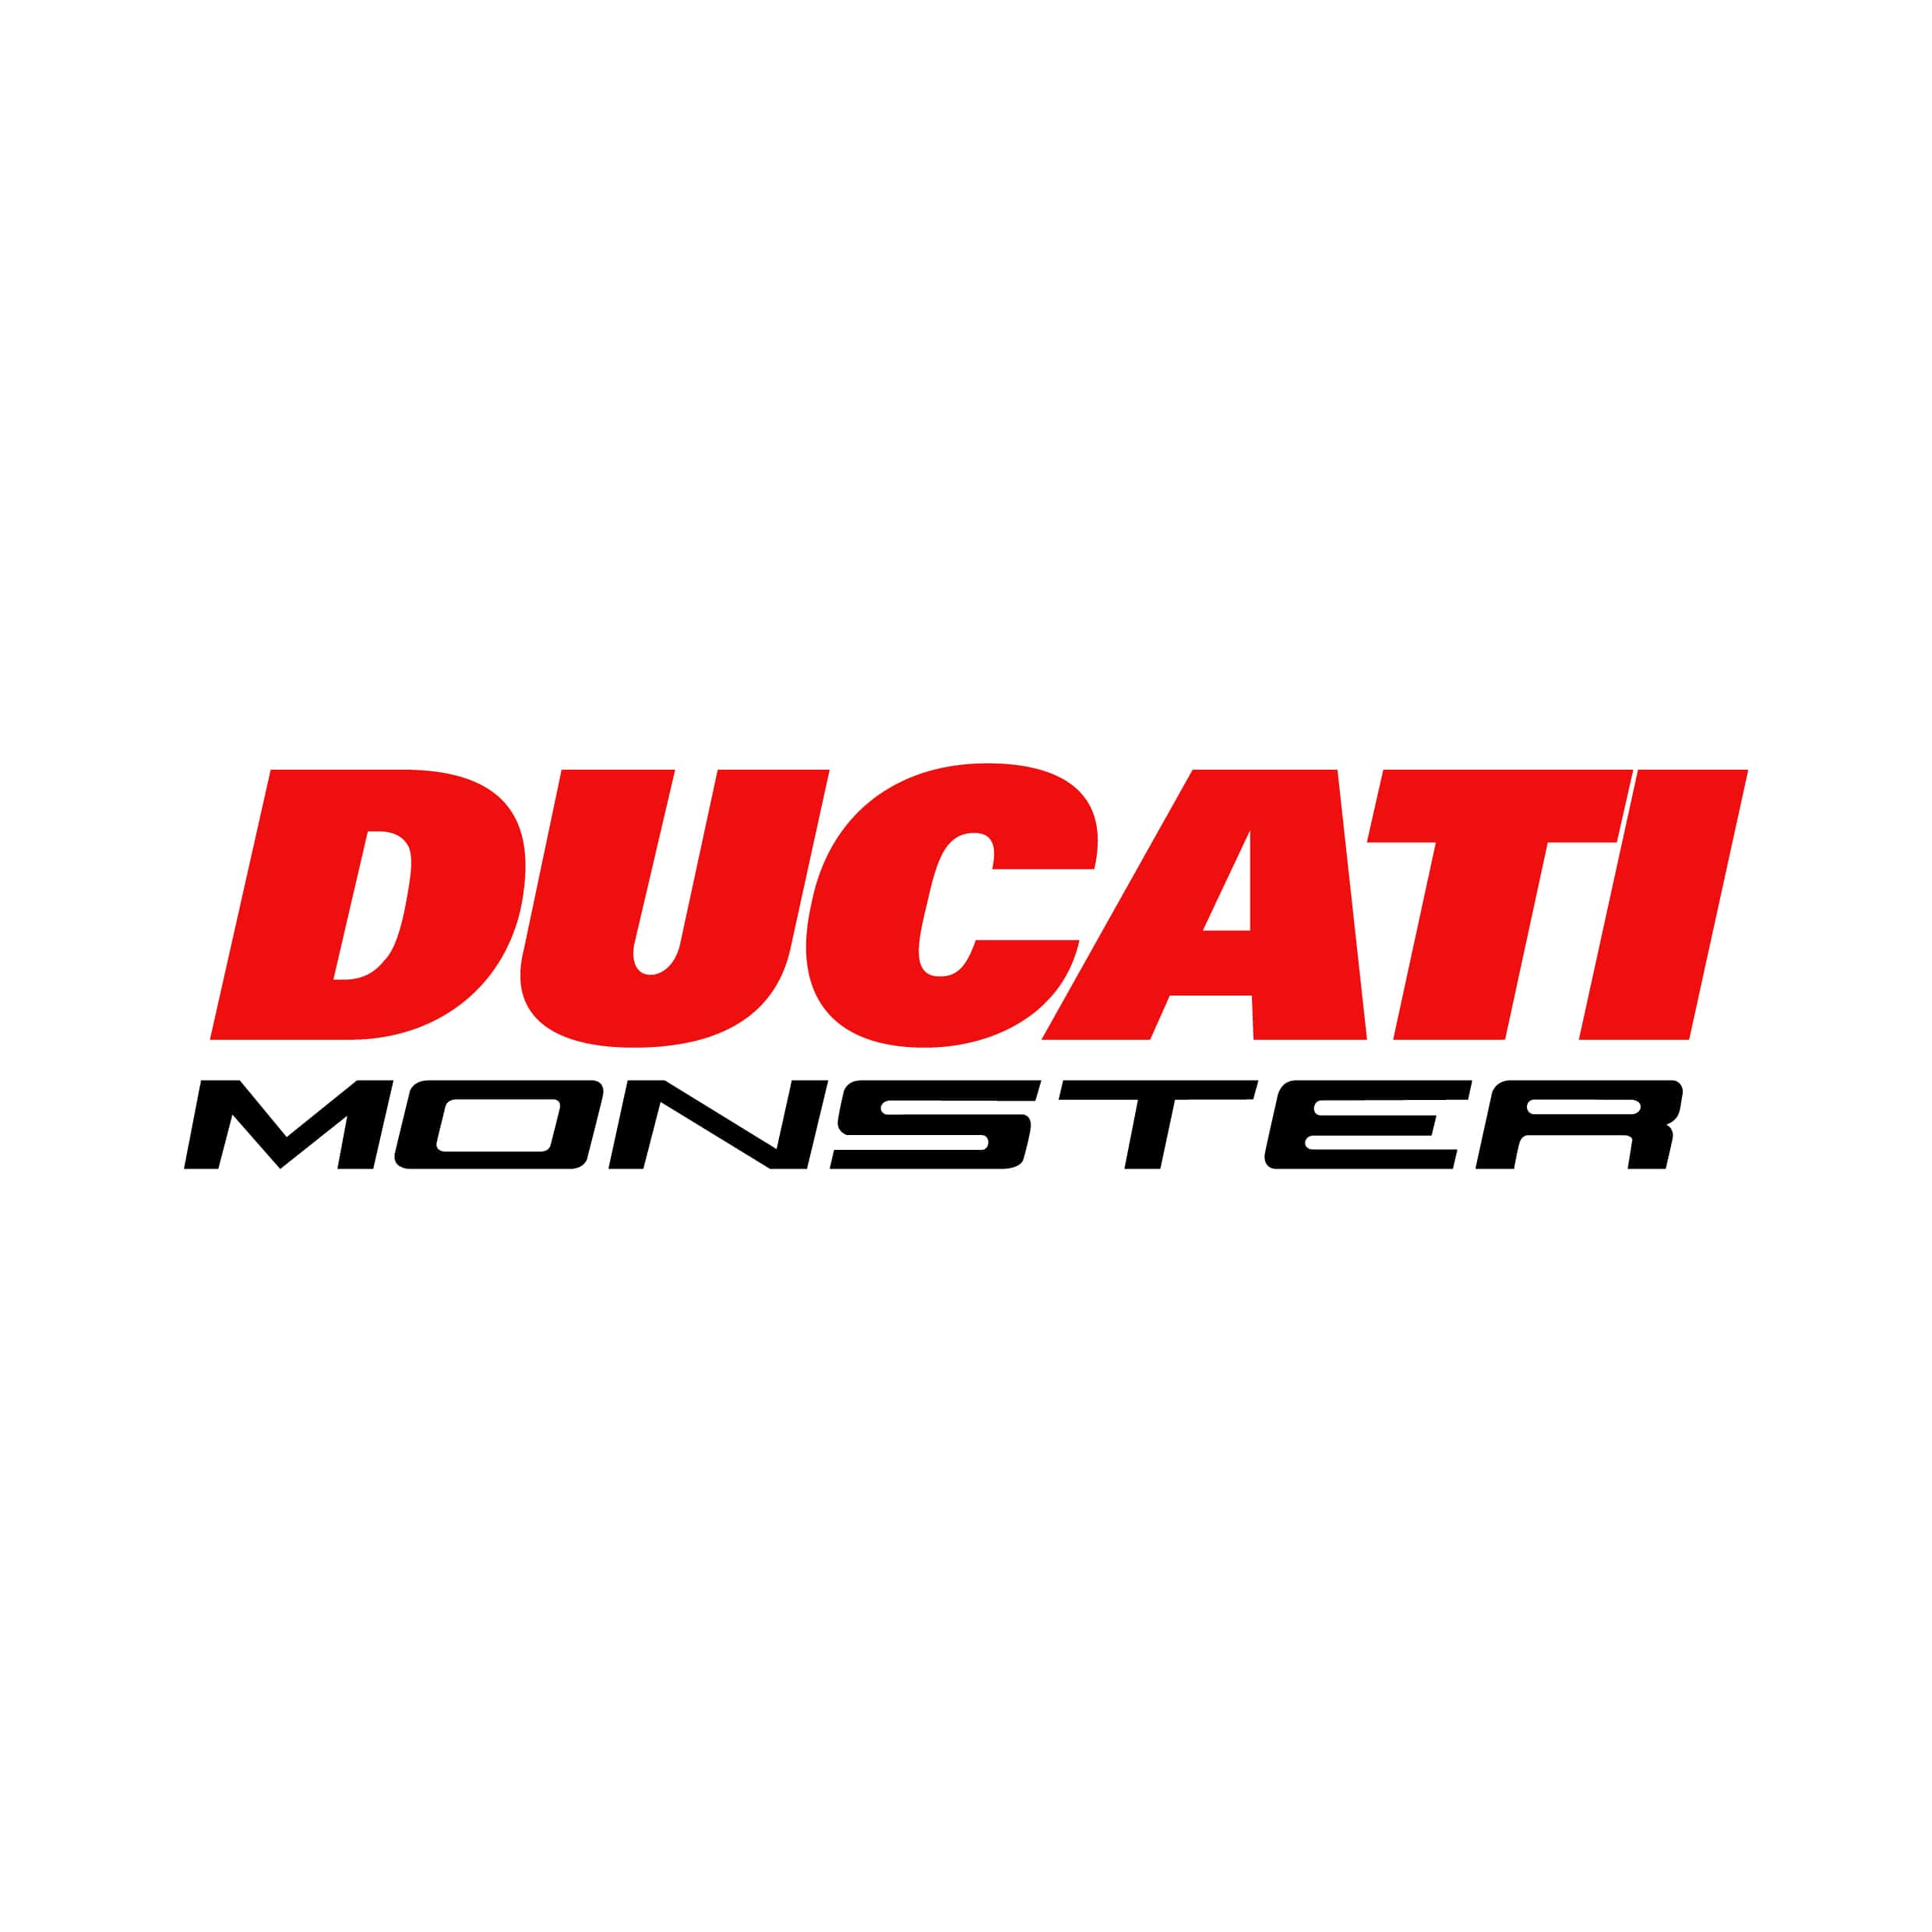 stickers-ducati-monster-ref4-autocollant-moto-sticker-deux-roue-autocollants-decals-sponsors-tuning-sport-logo-bike-scooter-min